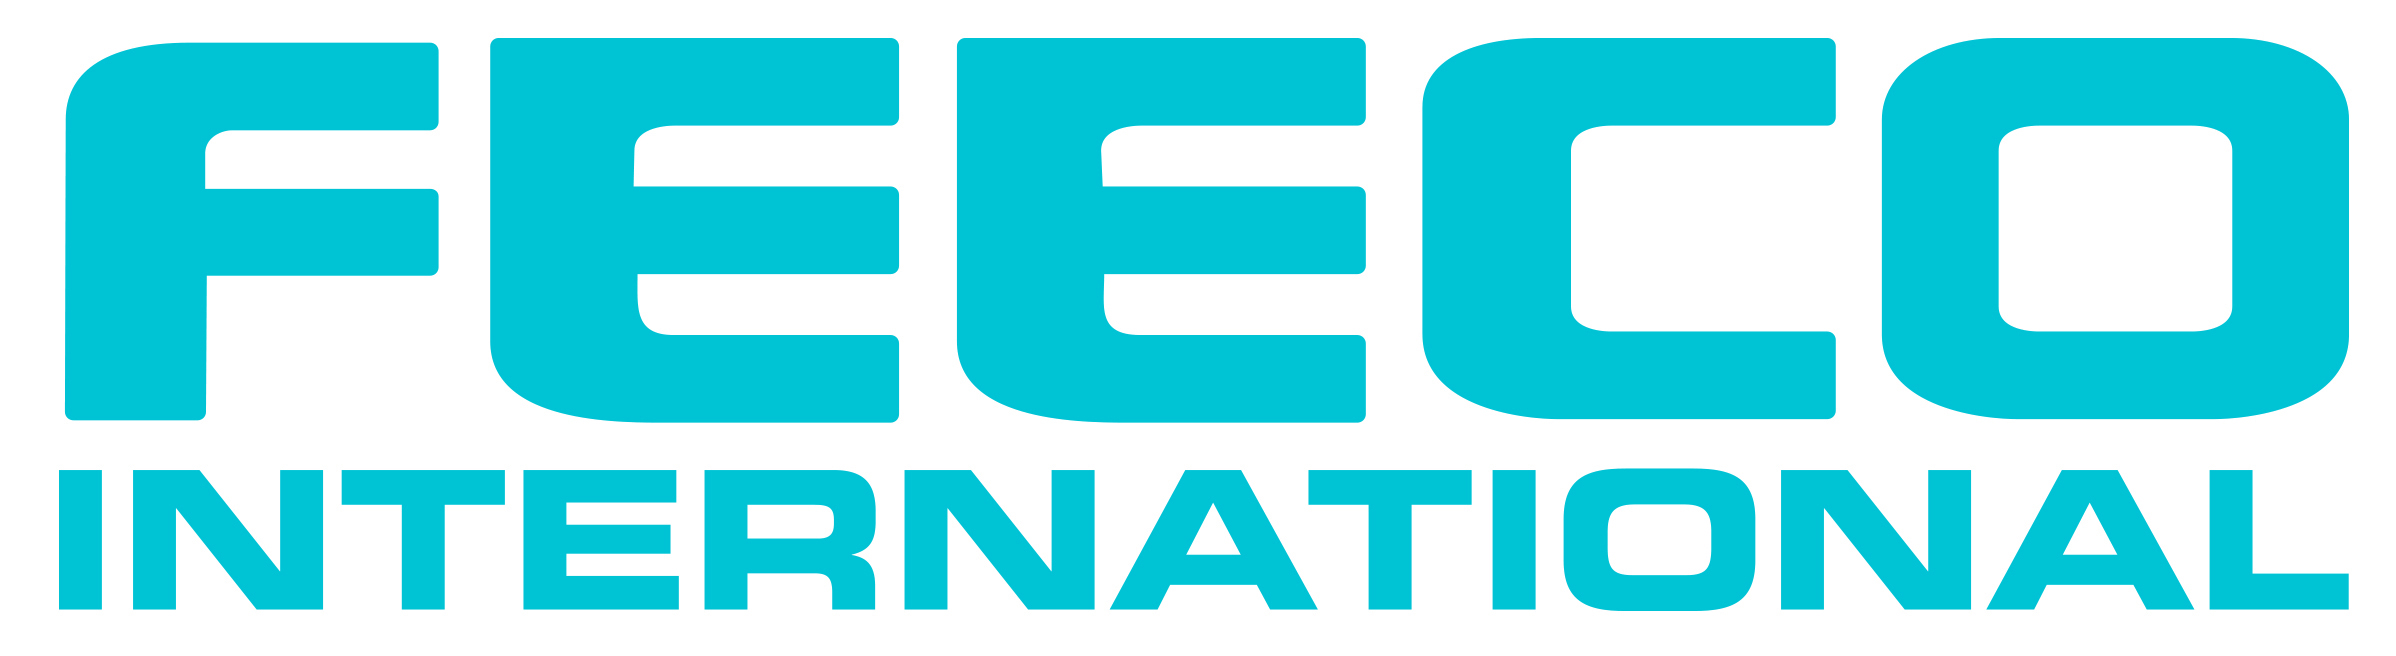 Feeco International